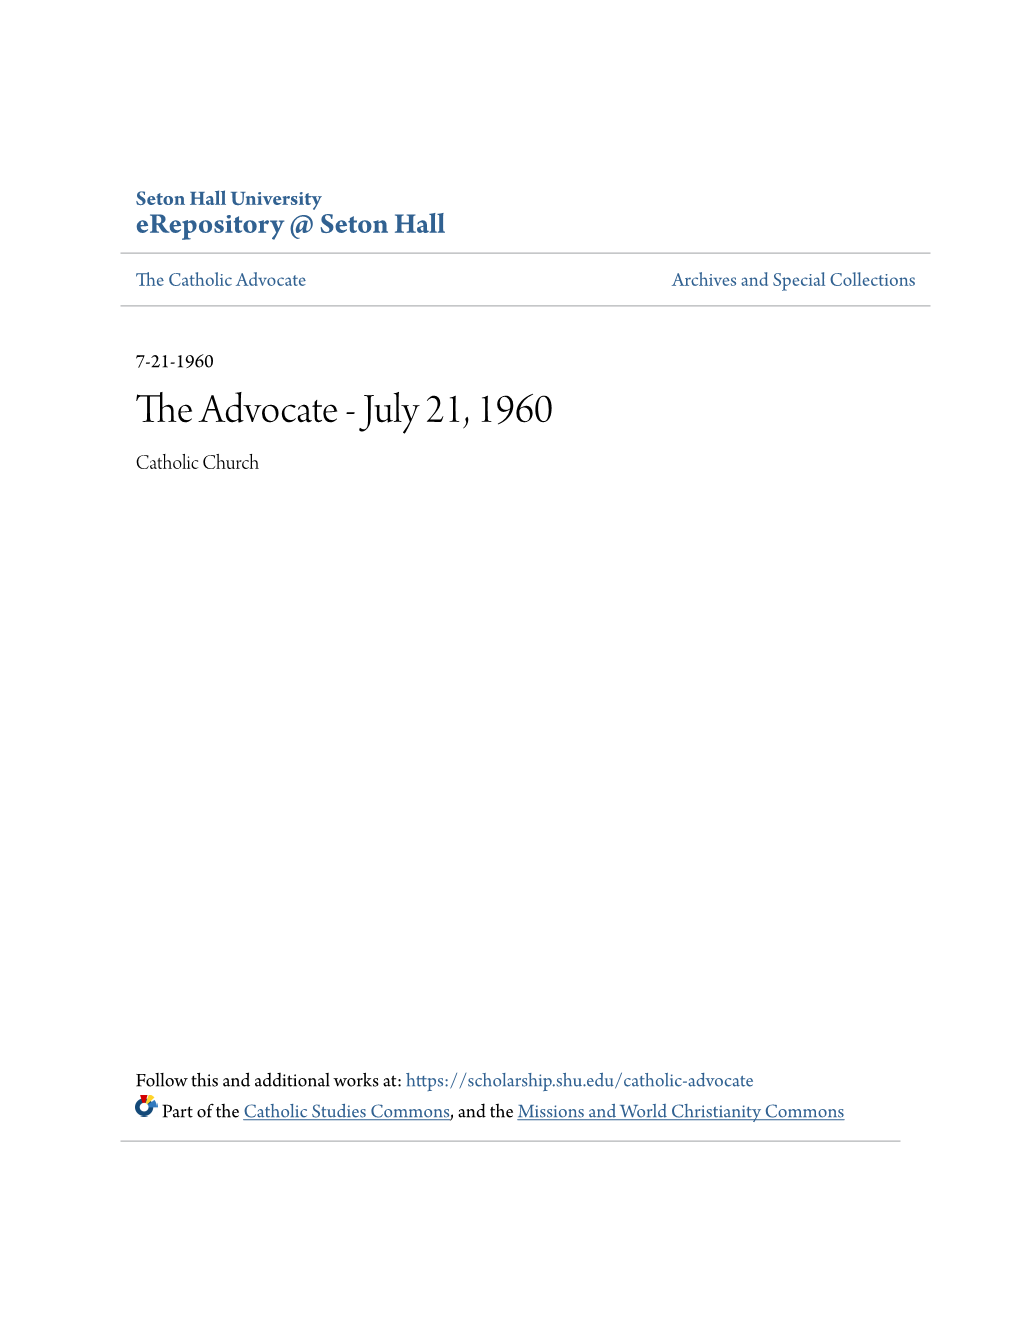 The Advocate - July 21, 1960 Catholic Church